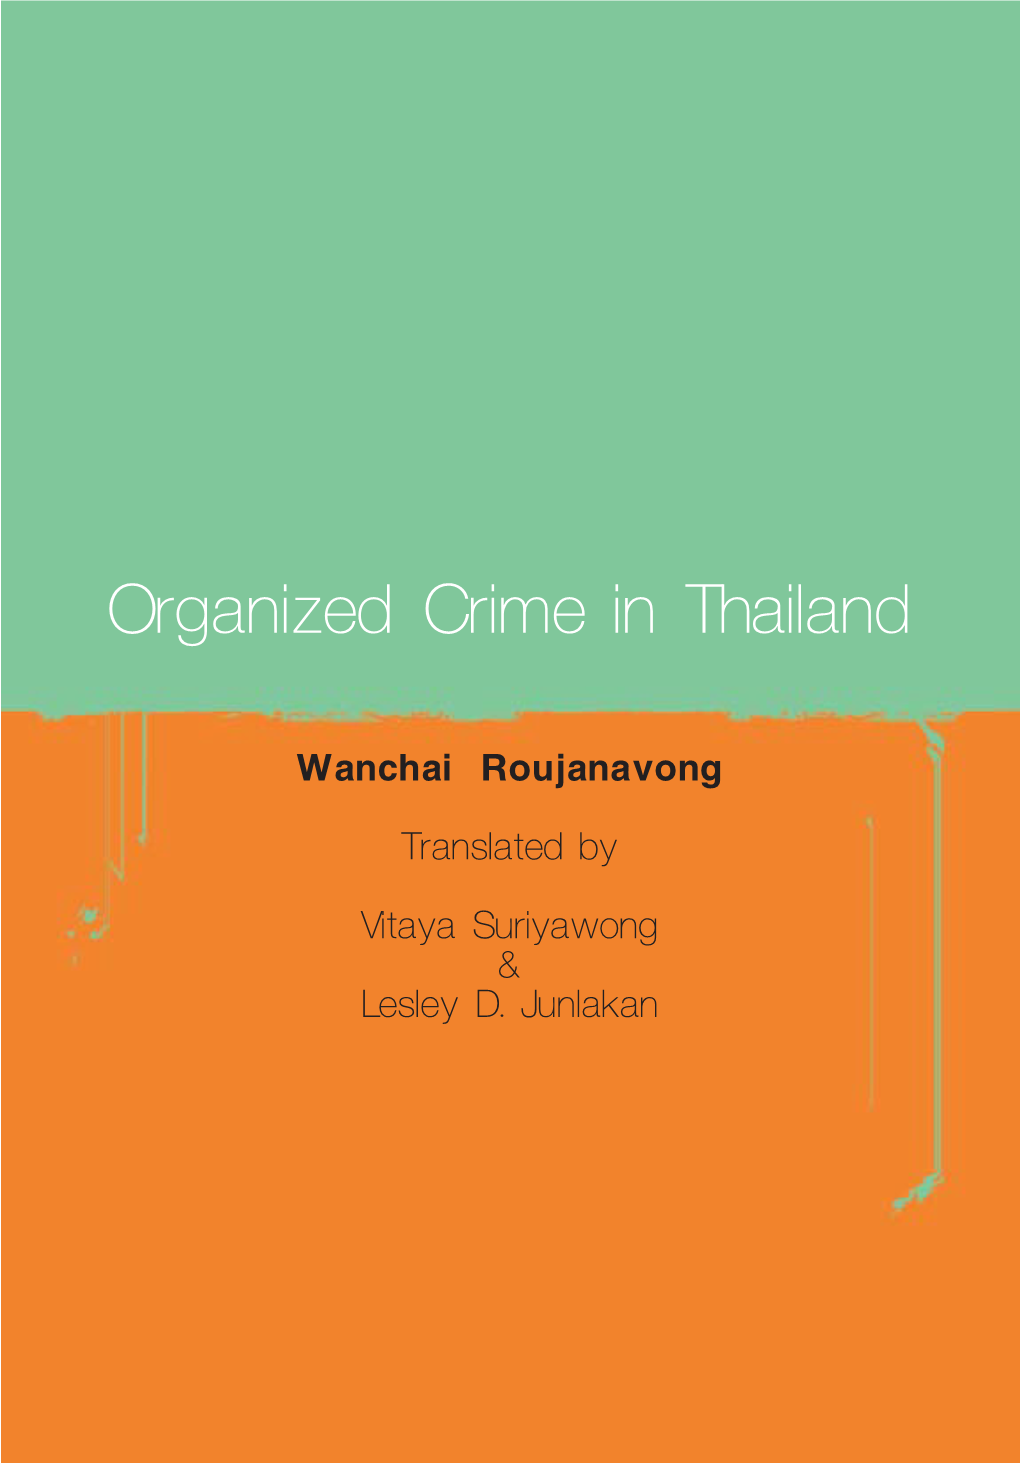 Organized Crime in Thailand